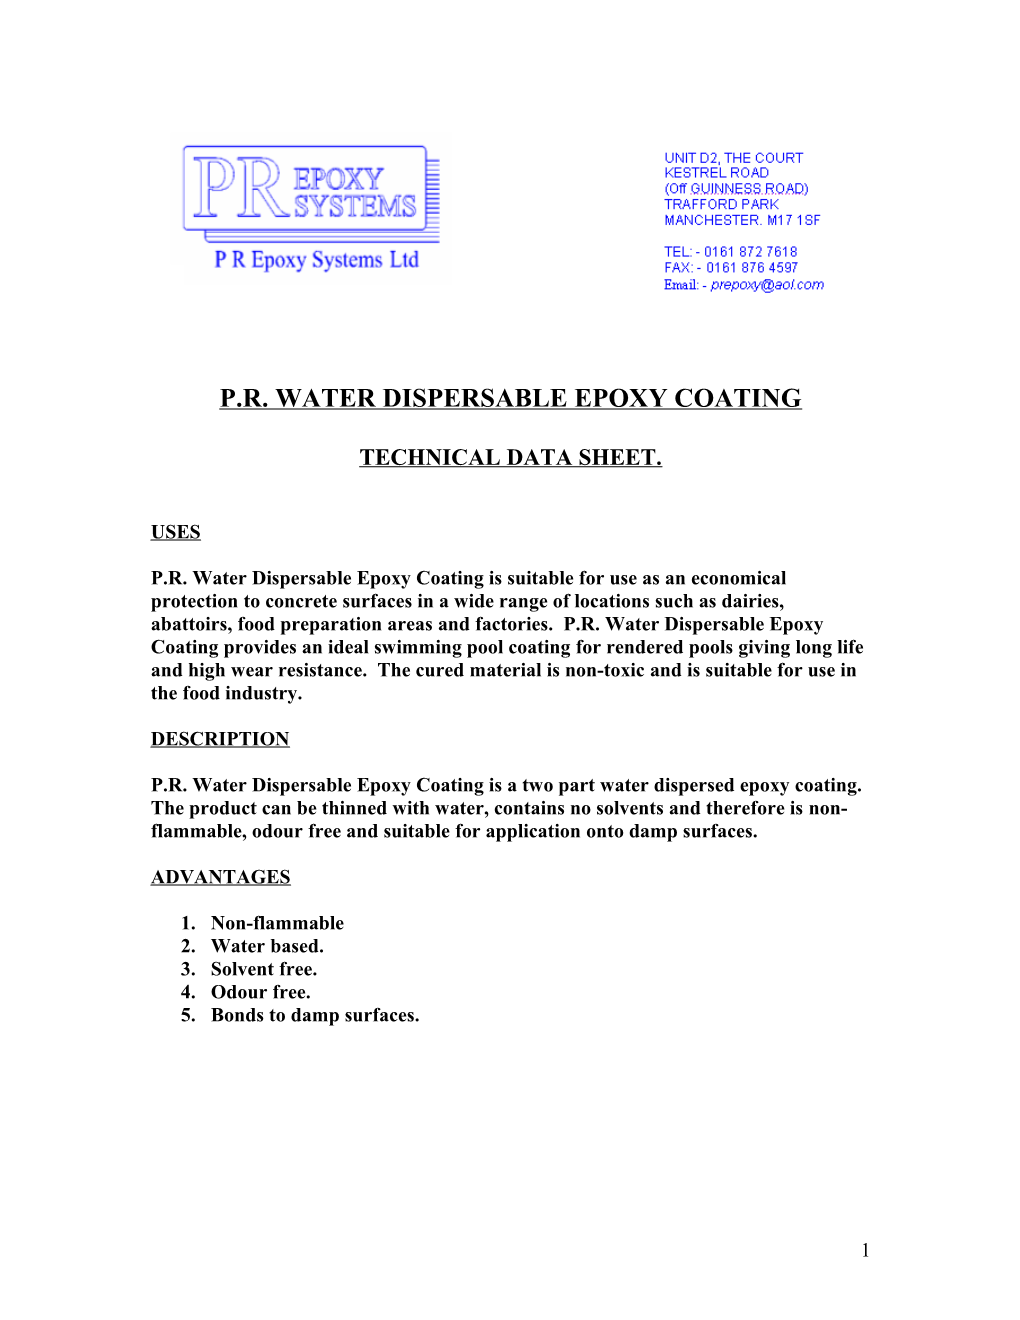 P.R. Water Dispersable Epoxy Coating